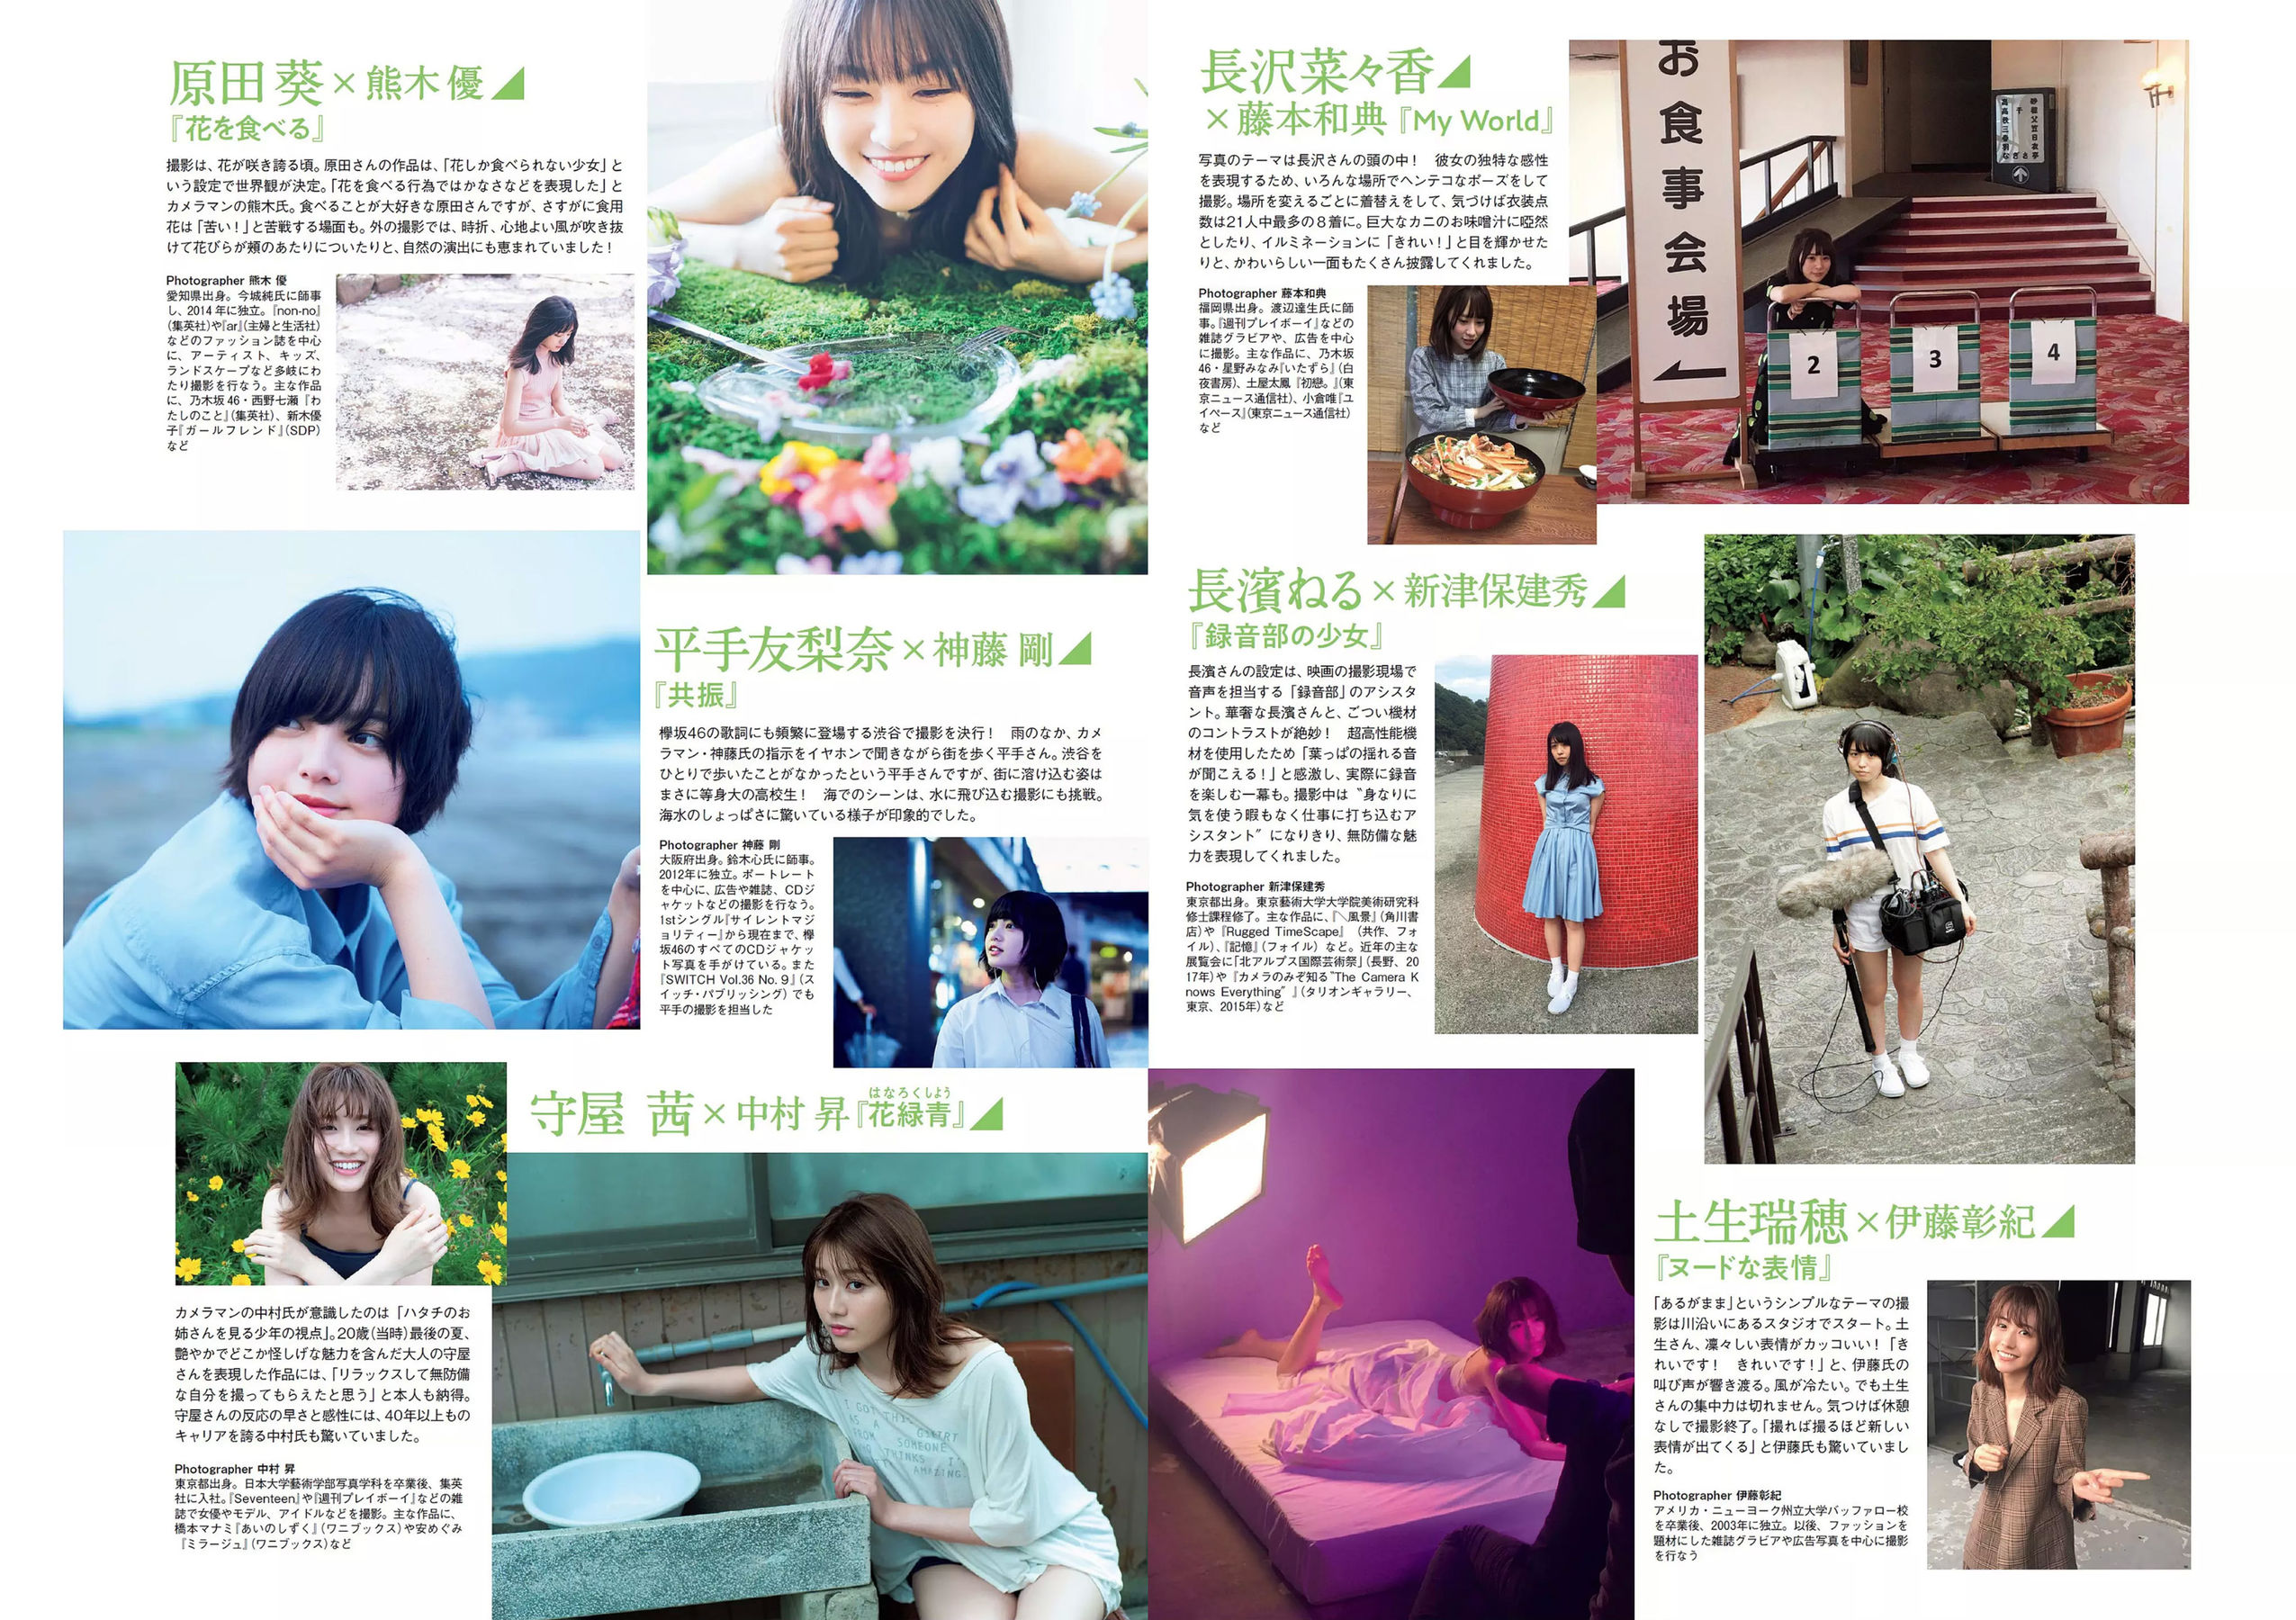 Keyakizaka46 Keyakizaka46 [Weekly Playboy] Tạp chí ảnh số 49 năm 2018 Trang 23 No.6c5671